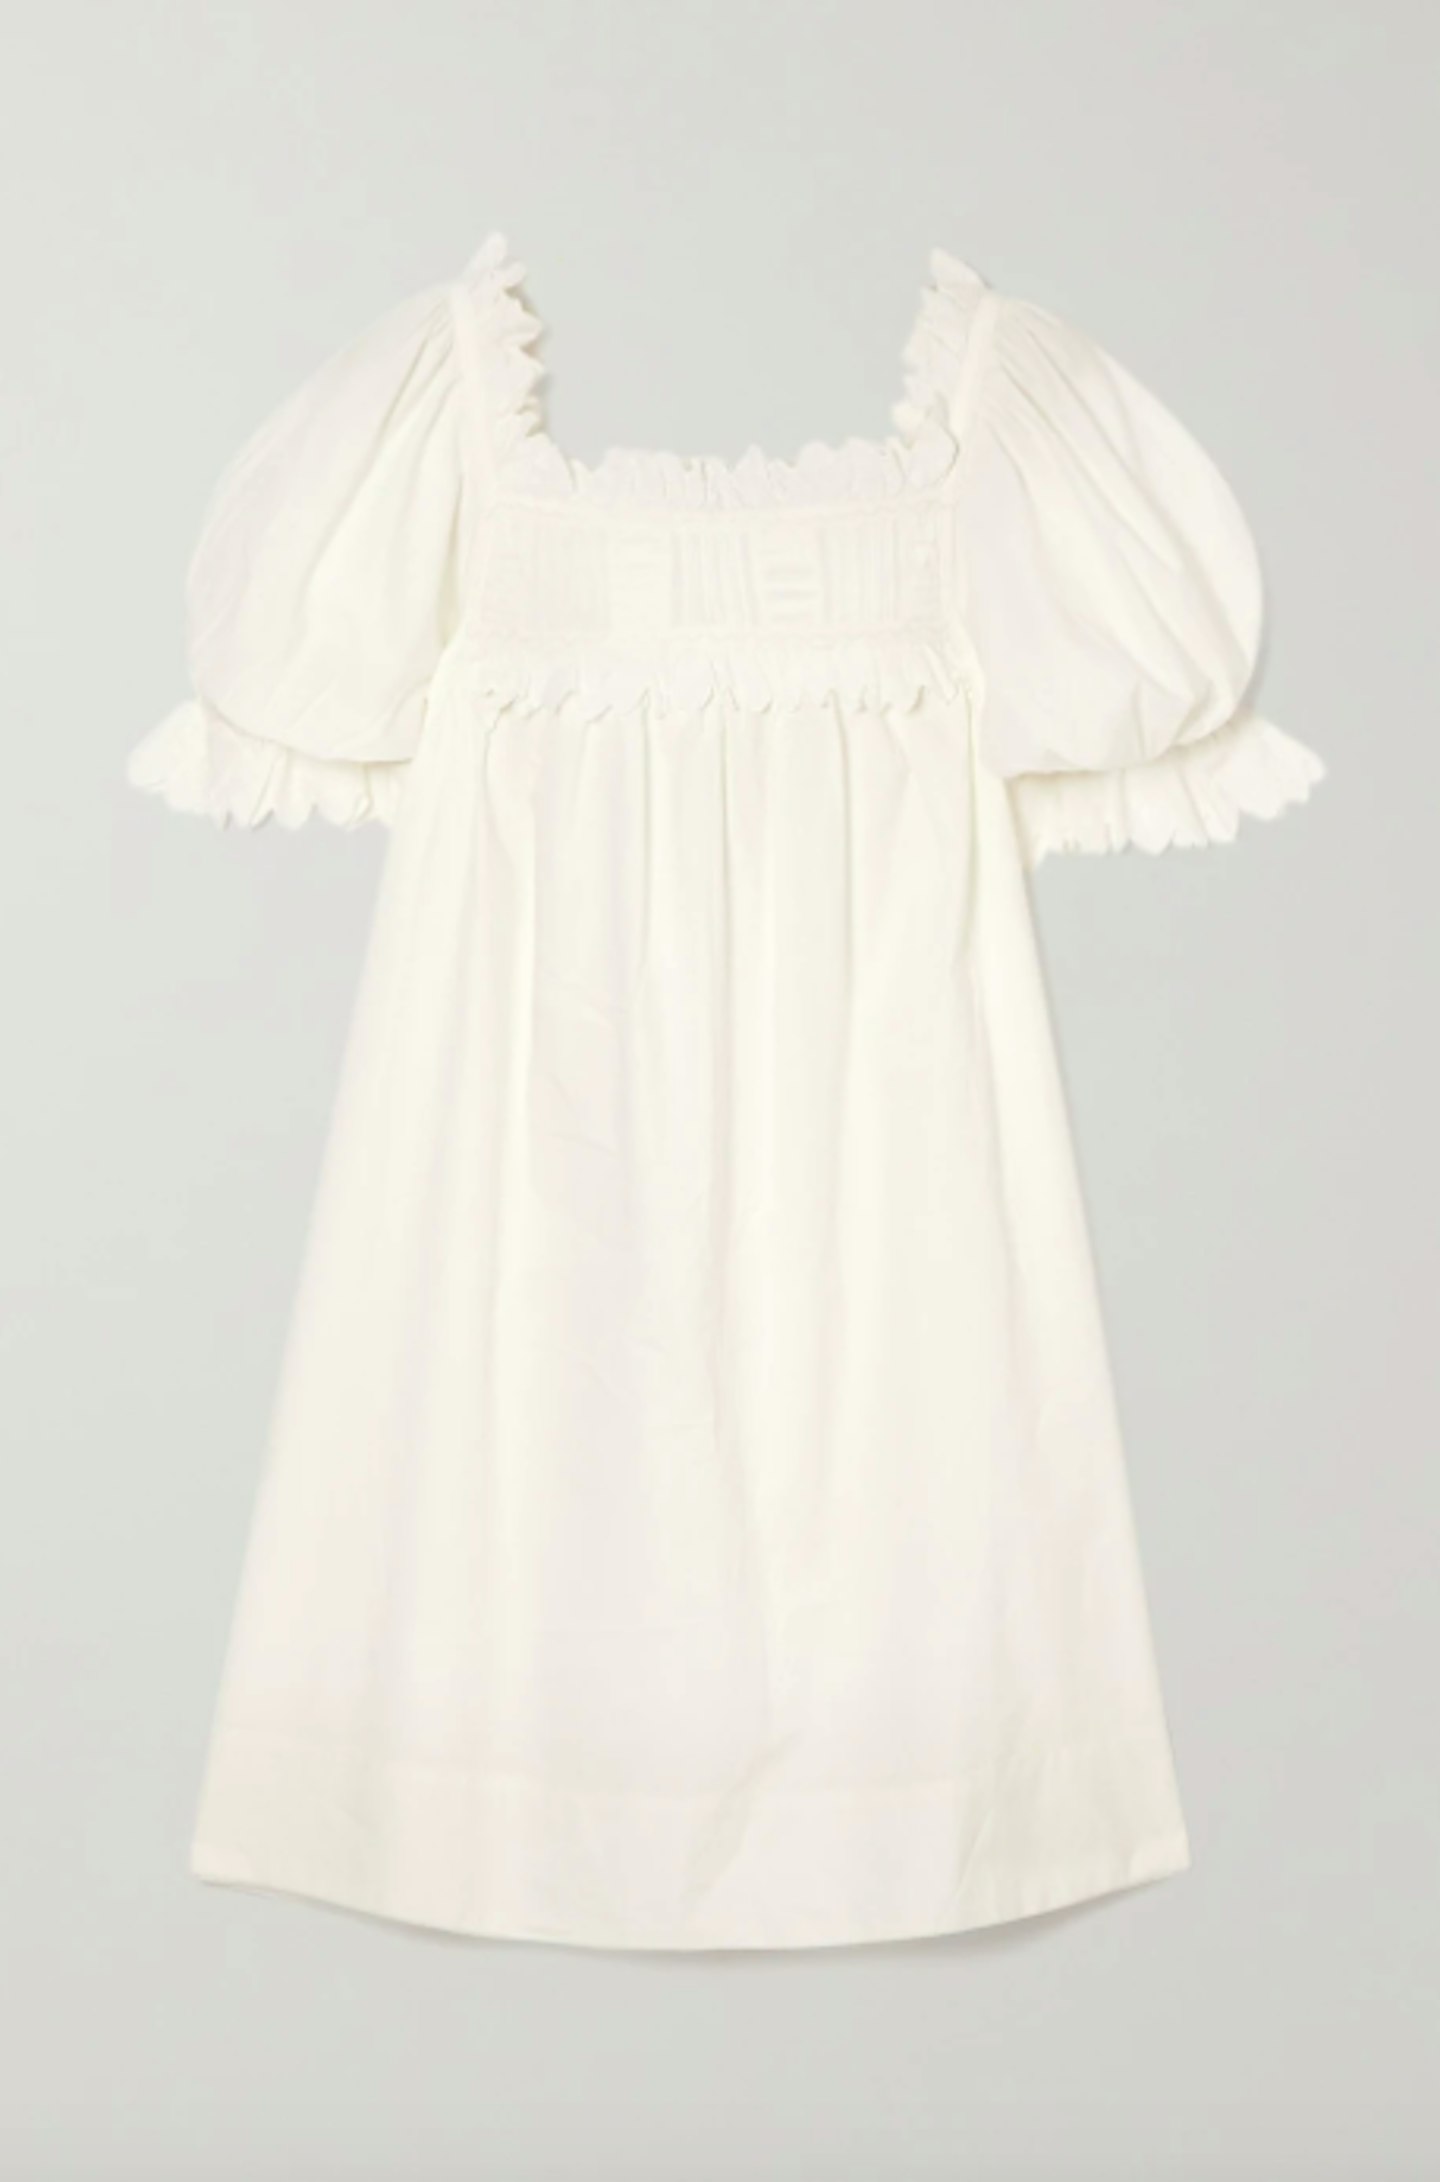 Du00f4en, Scalloped Cotton Poplin Mini Dress, £230 at Net-a-Porter